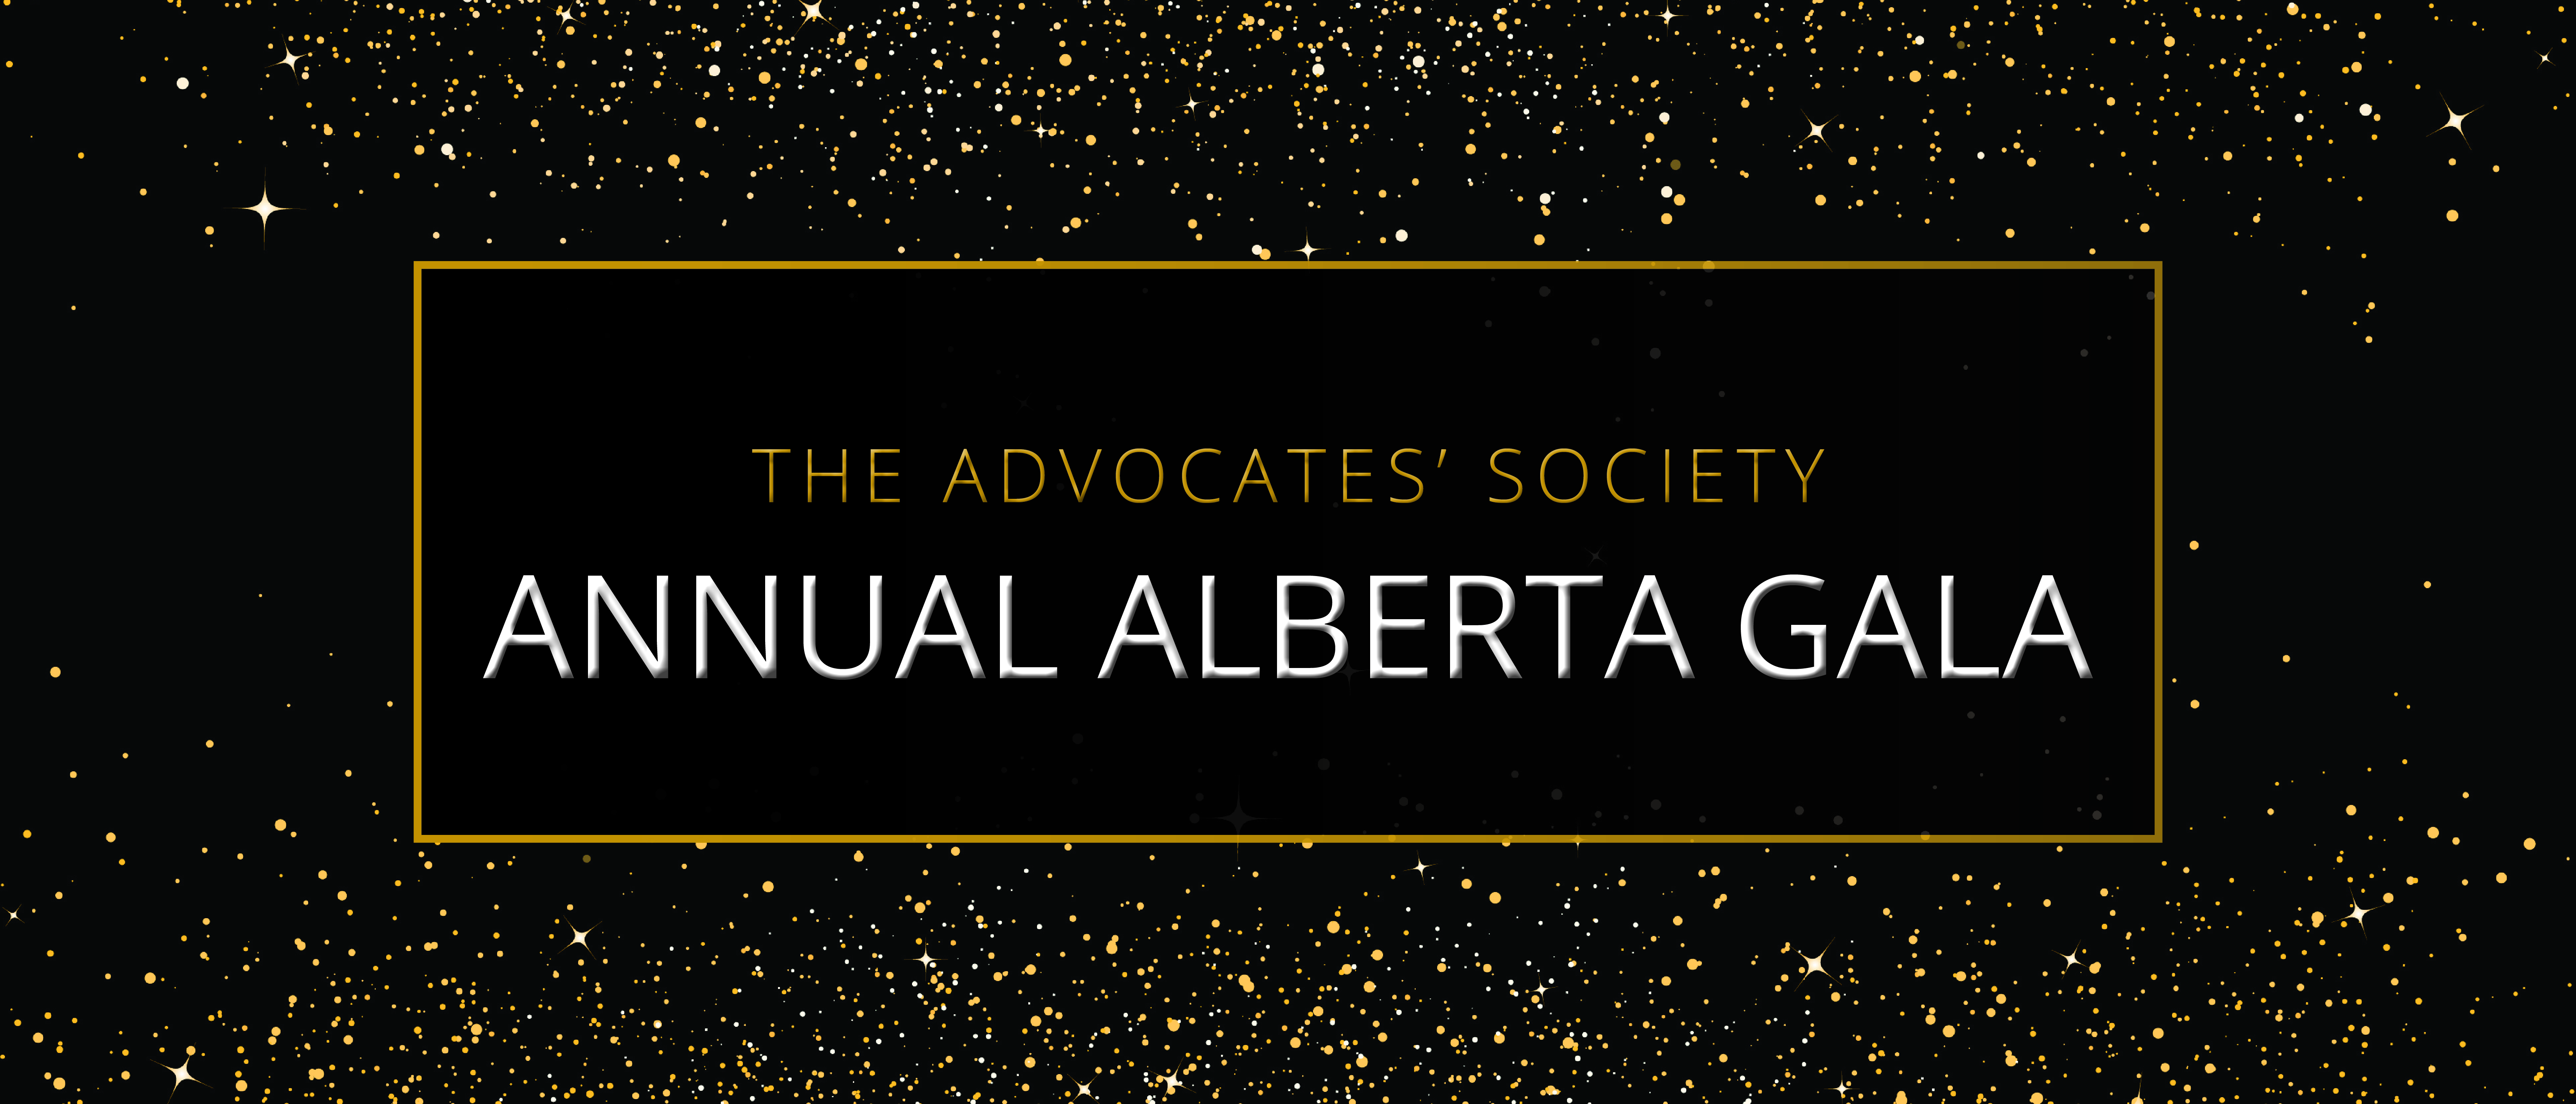 The Advocates' Society Annual Alberta Gala